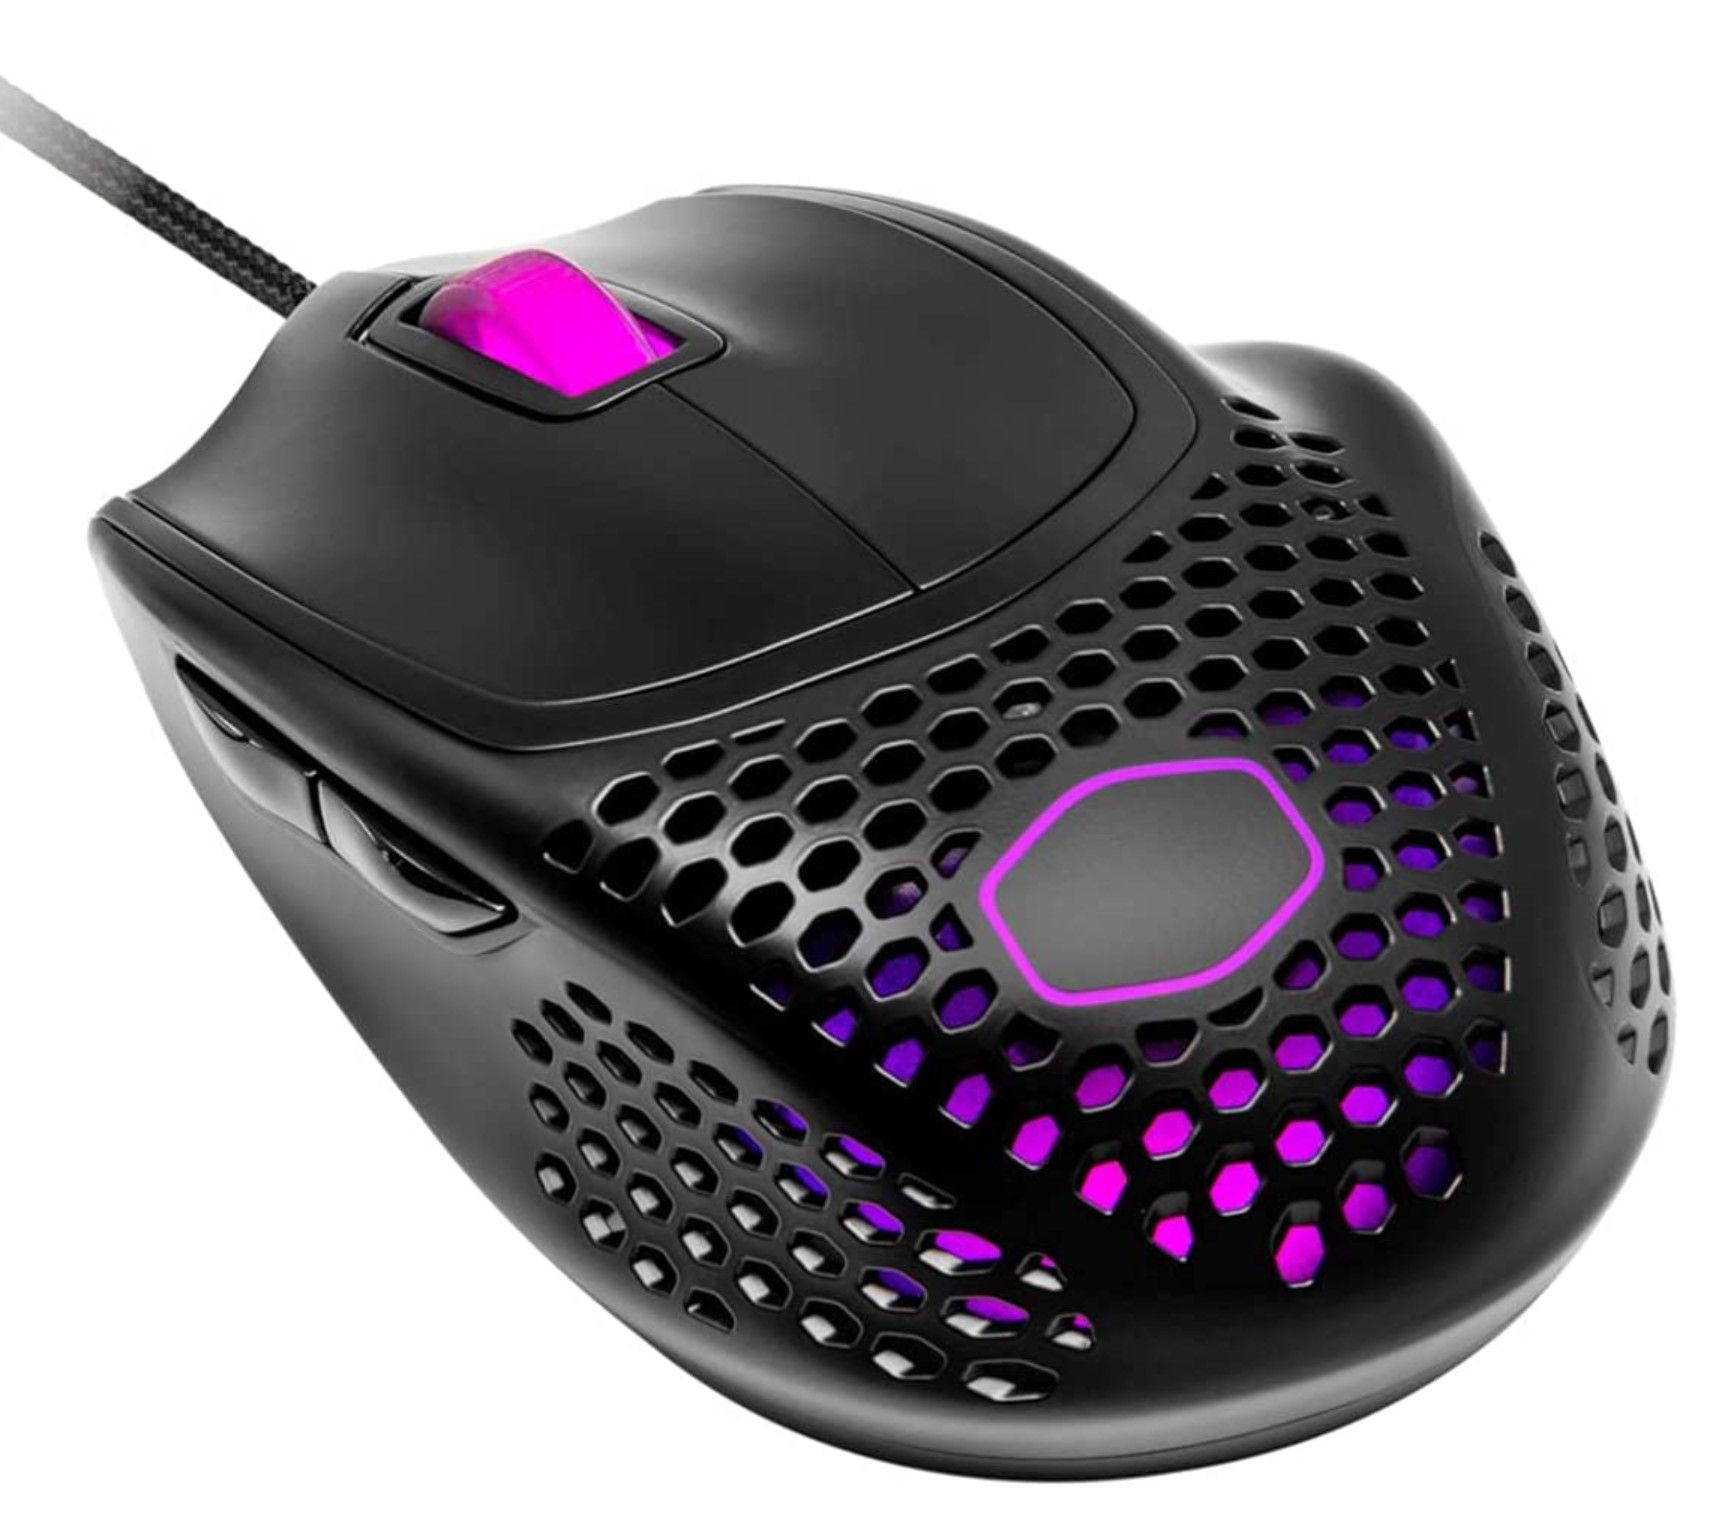 Cooler Master MM720 Lightweight Gaming Mouse